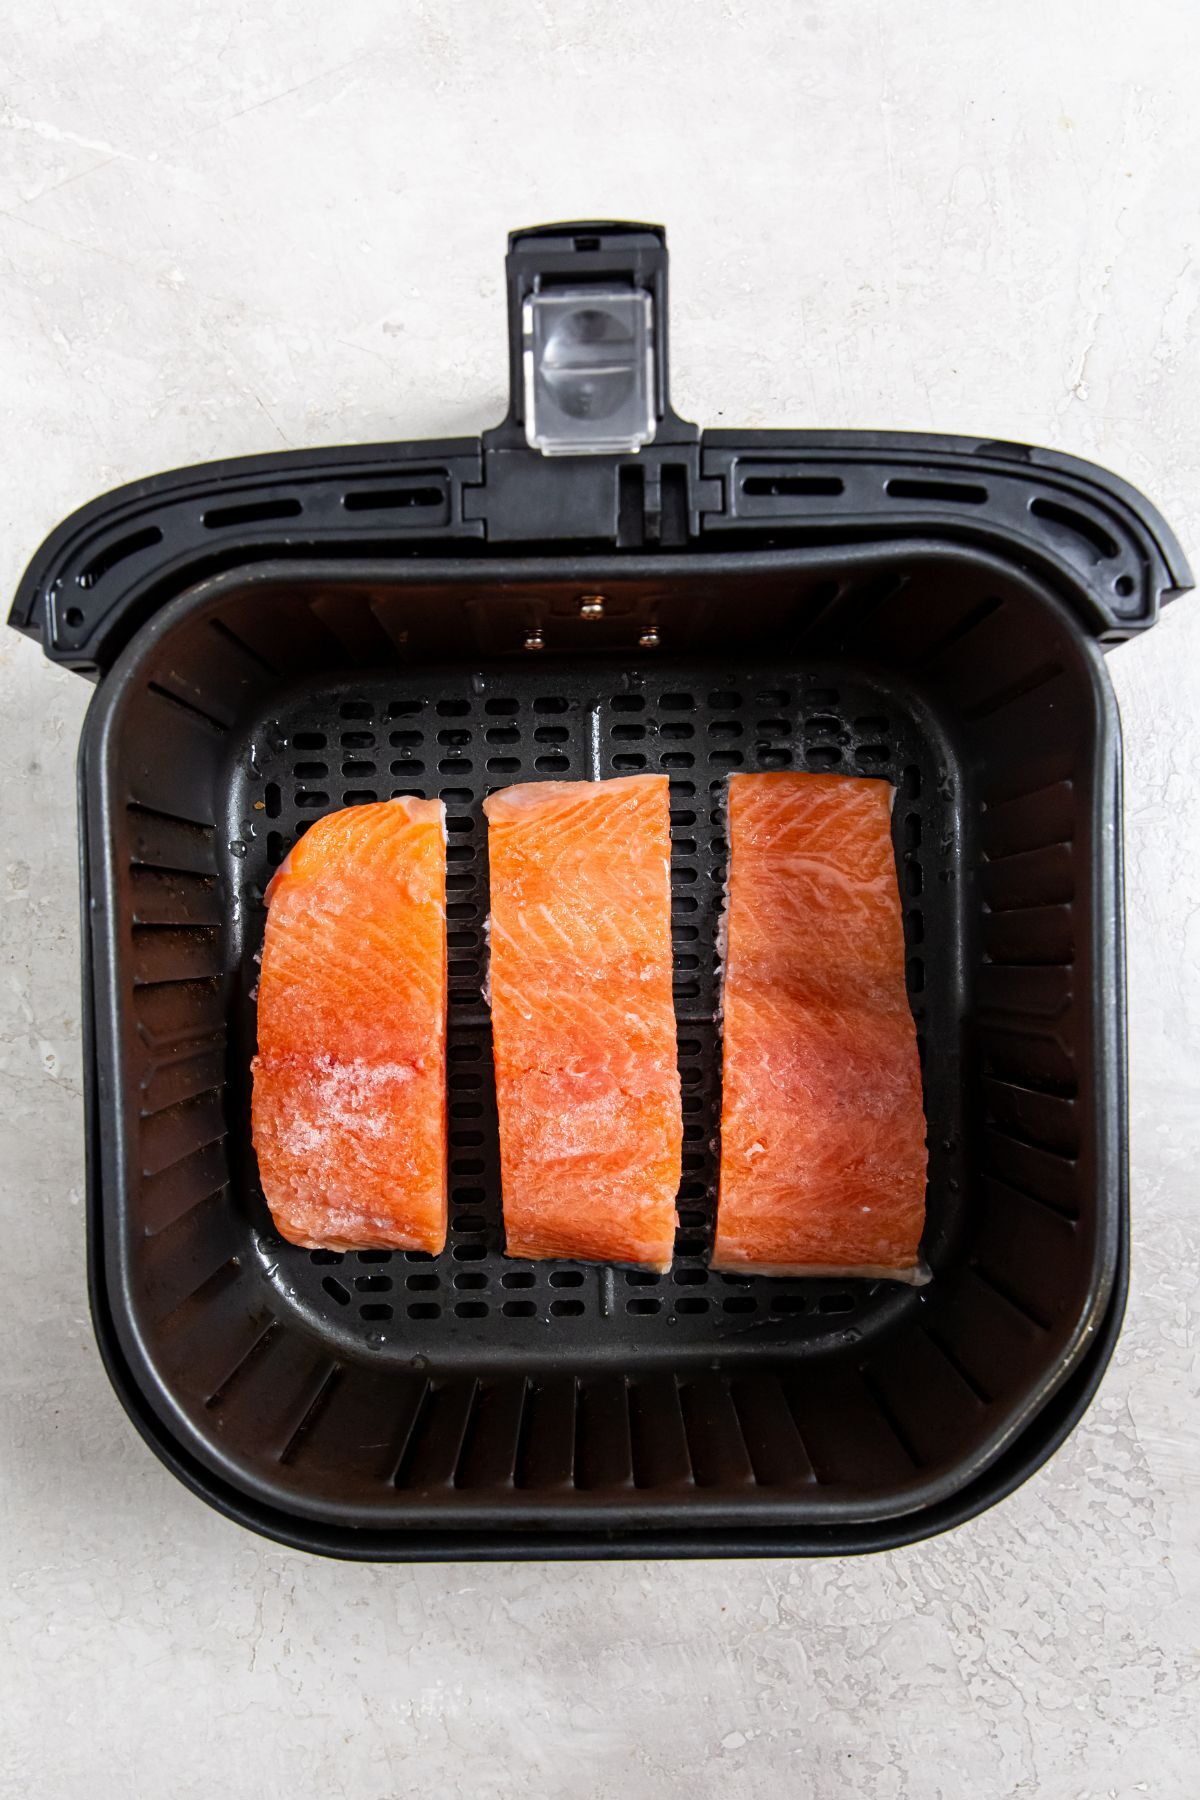 Frozen salmon in the air fryer